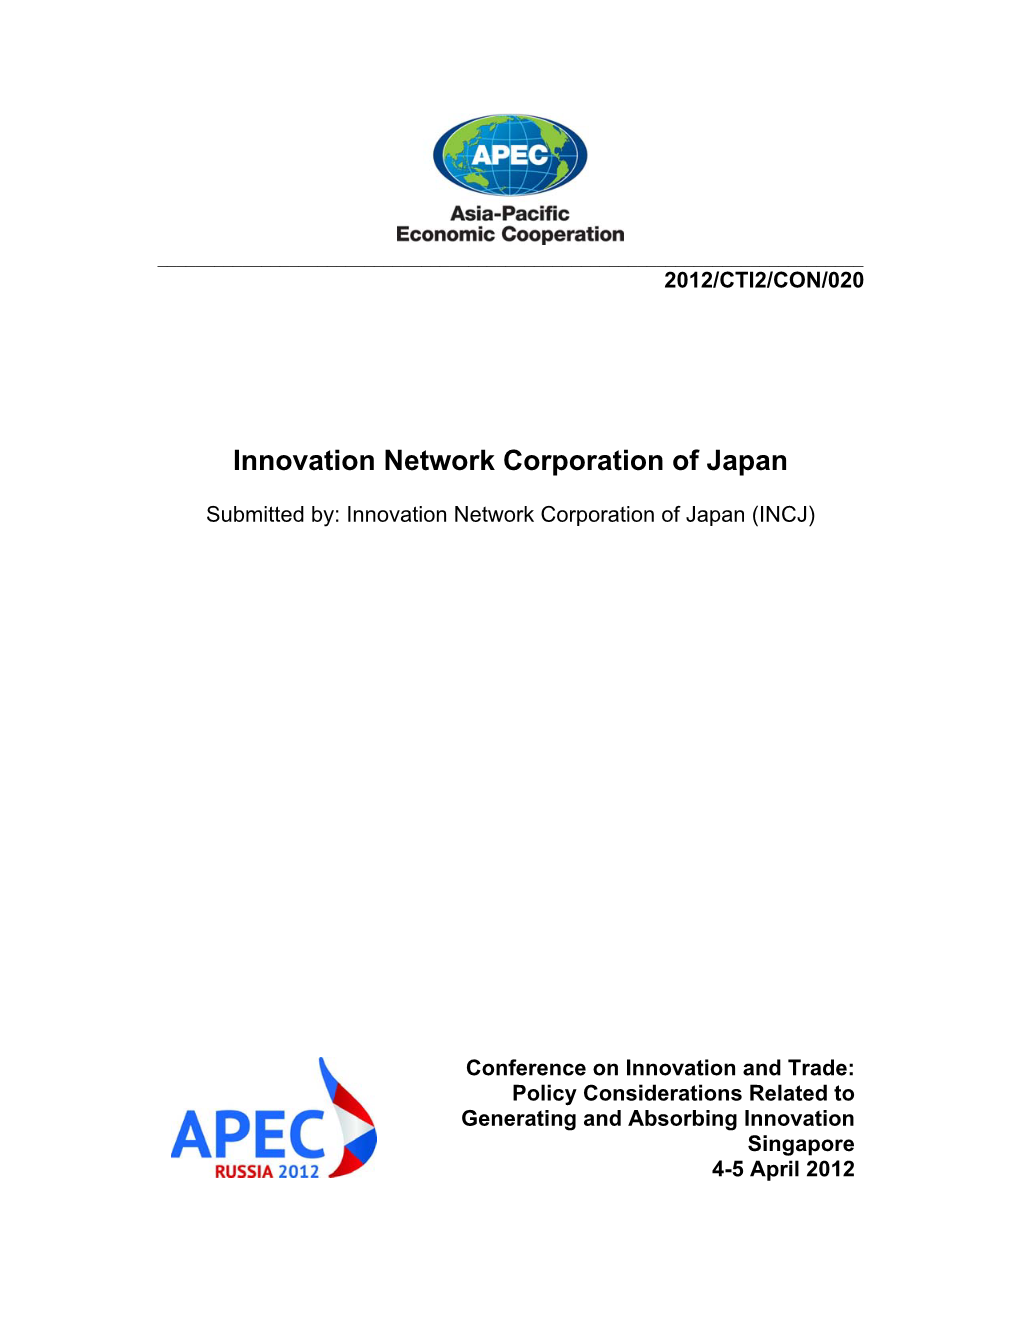 Innovation Network Corporation of Japan